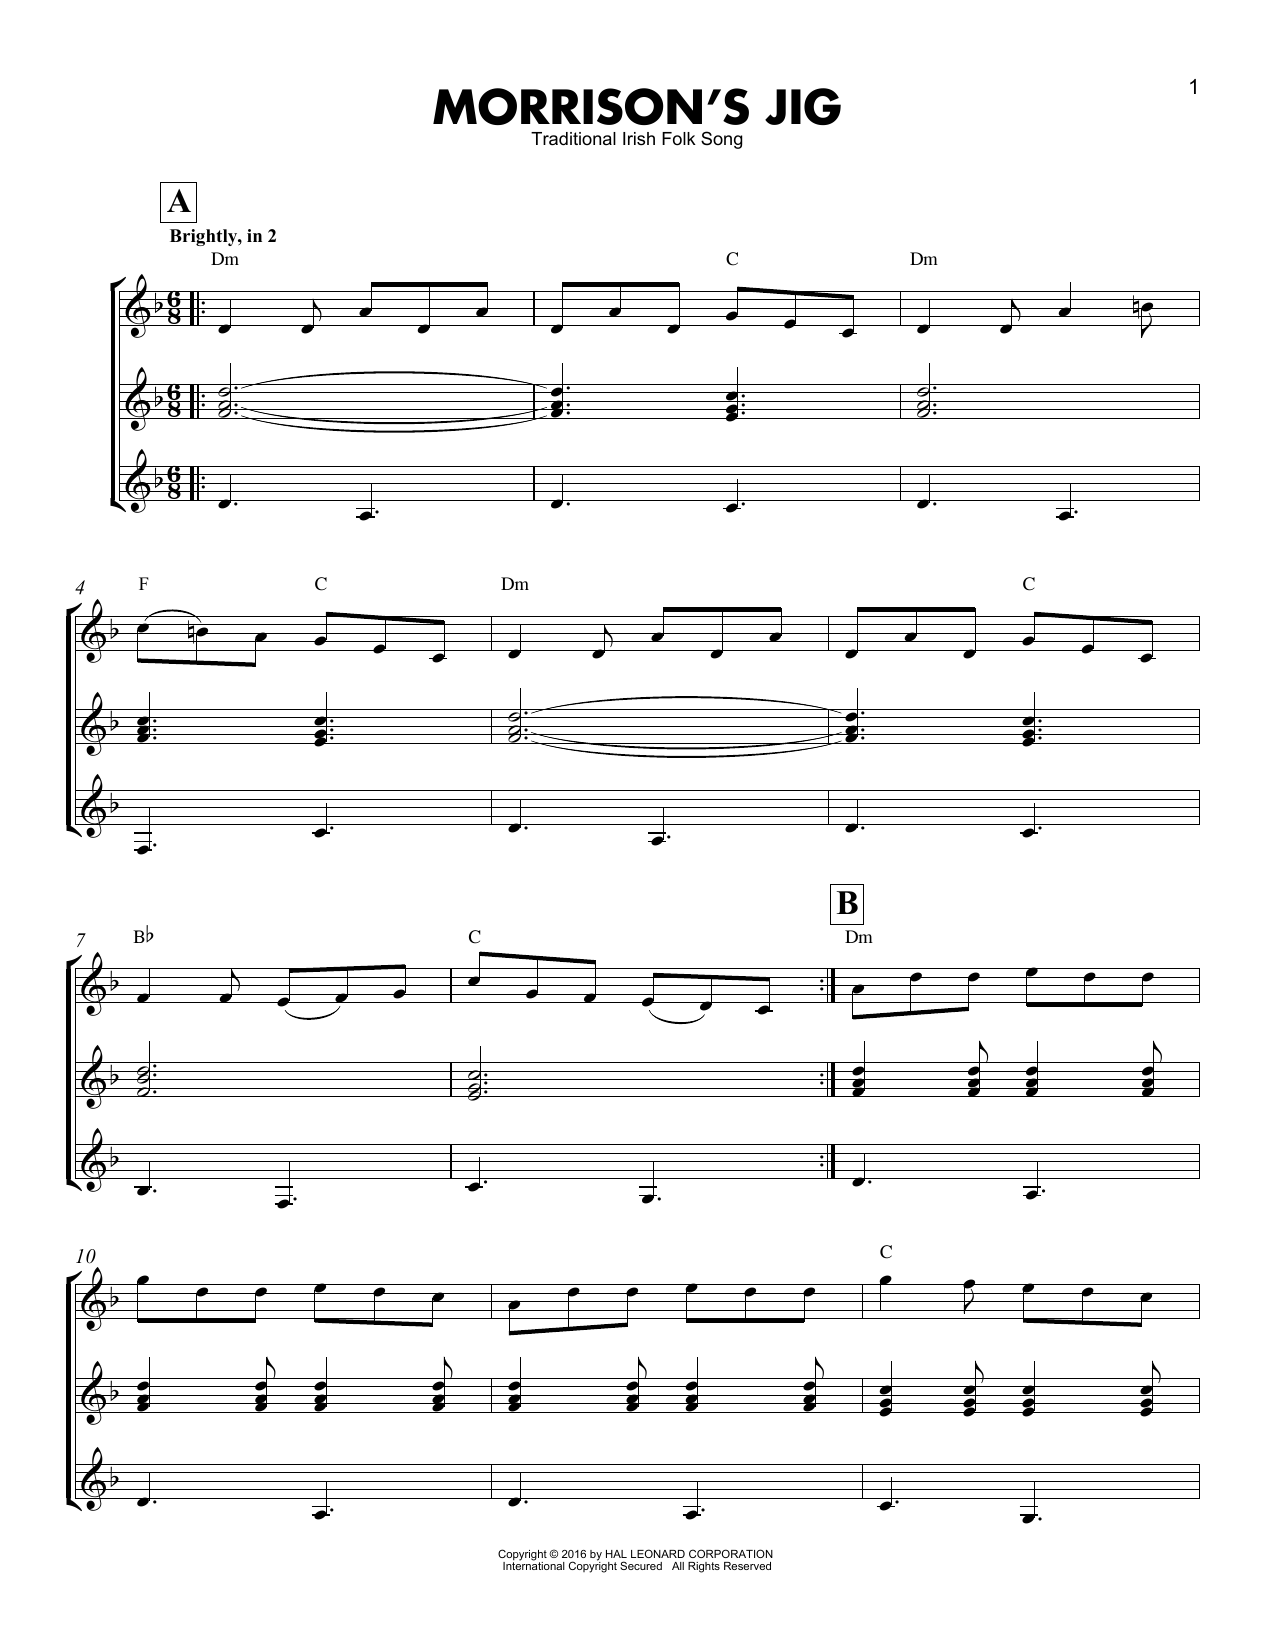 Traditional Irish Folk Song Morrison's Jig Sheet Music Notes & Chords for Guitar Ensemble - Download or Print PDF